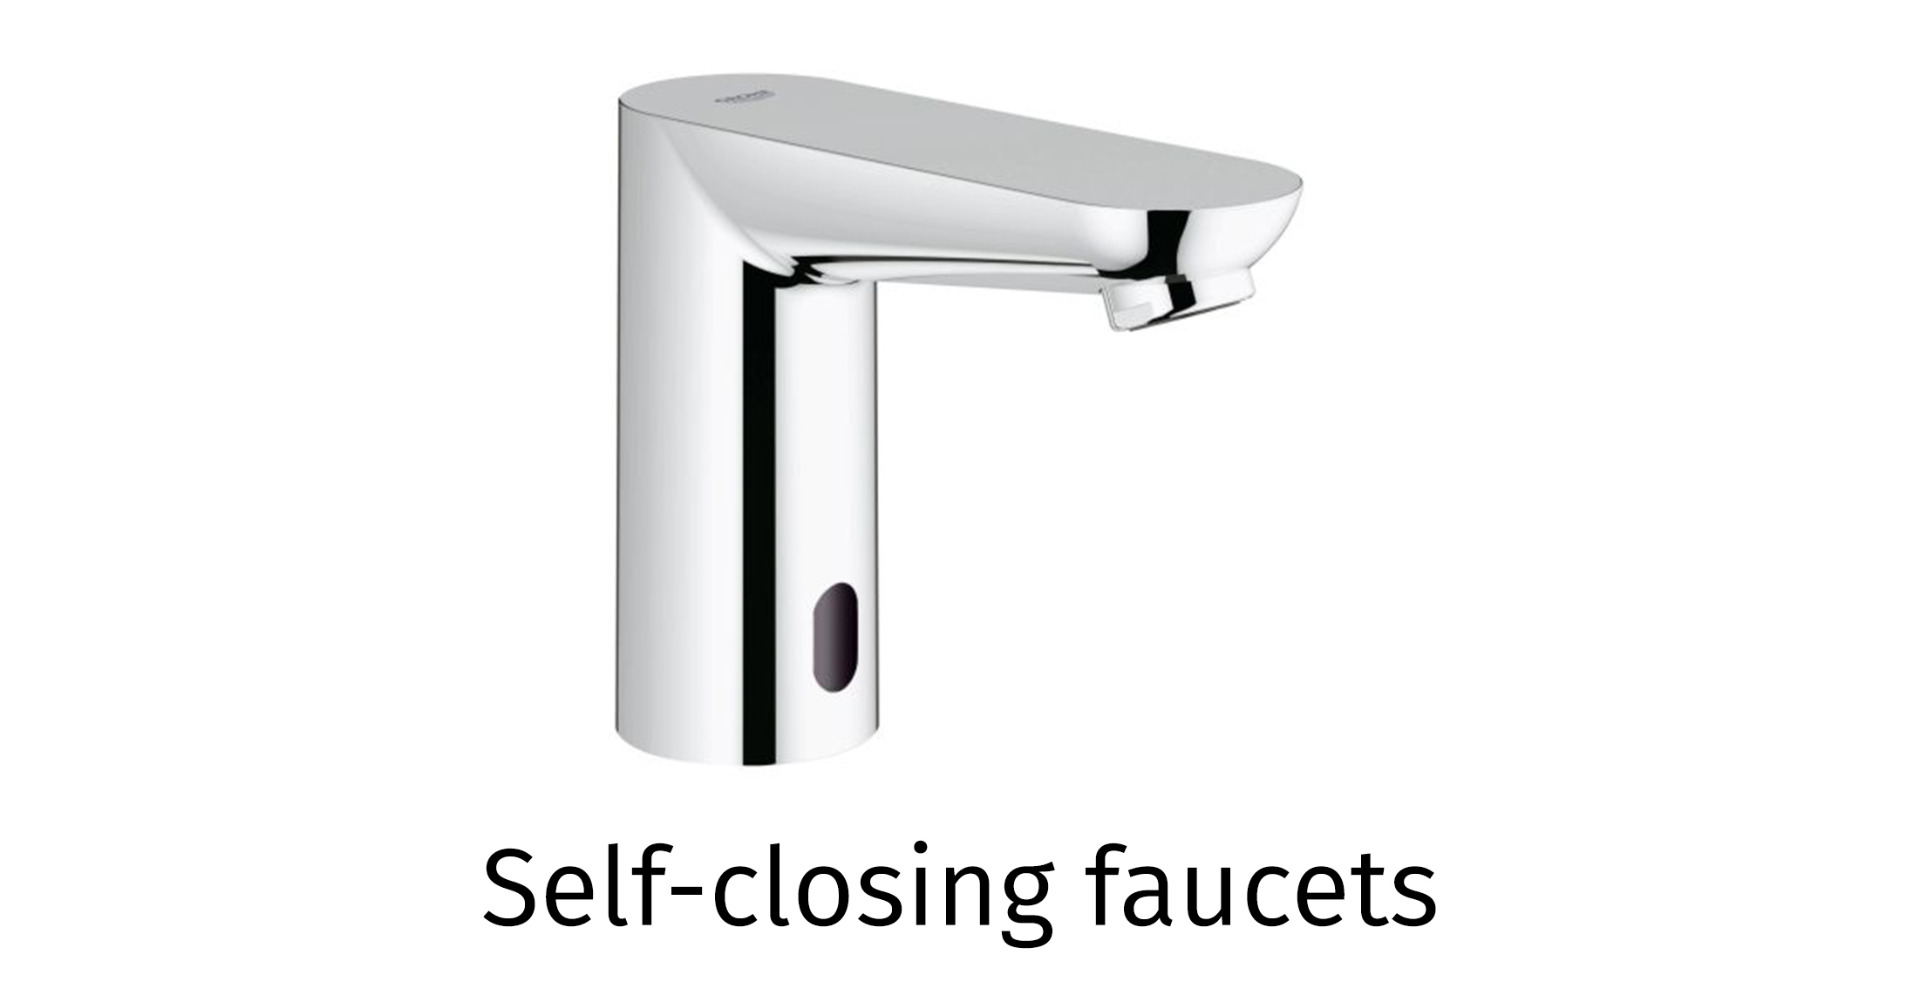 Self-closing faucets